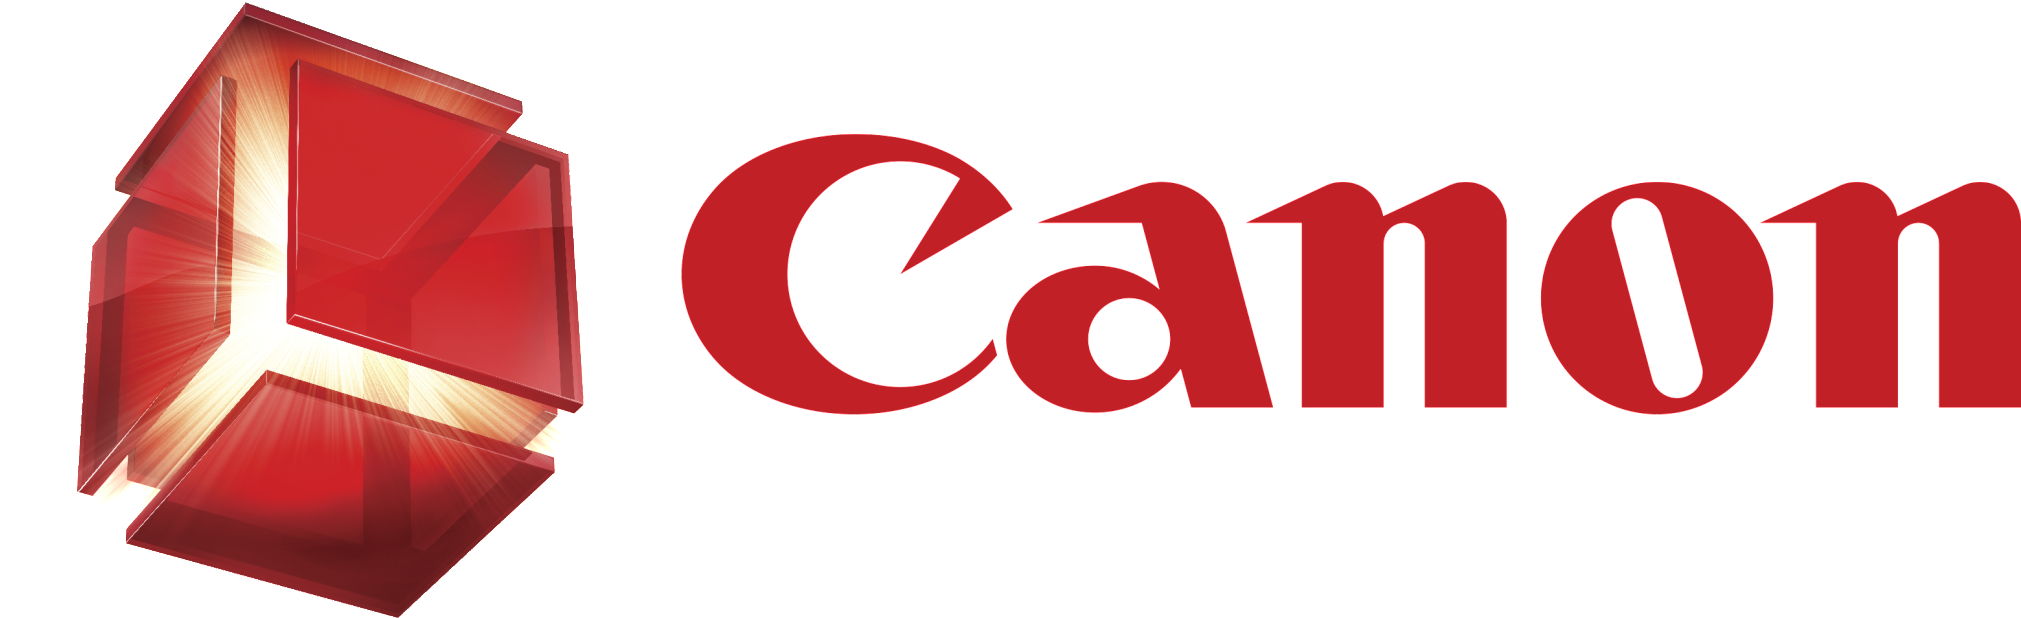 Canon Logo Transparent Background